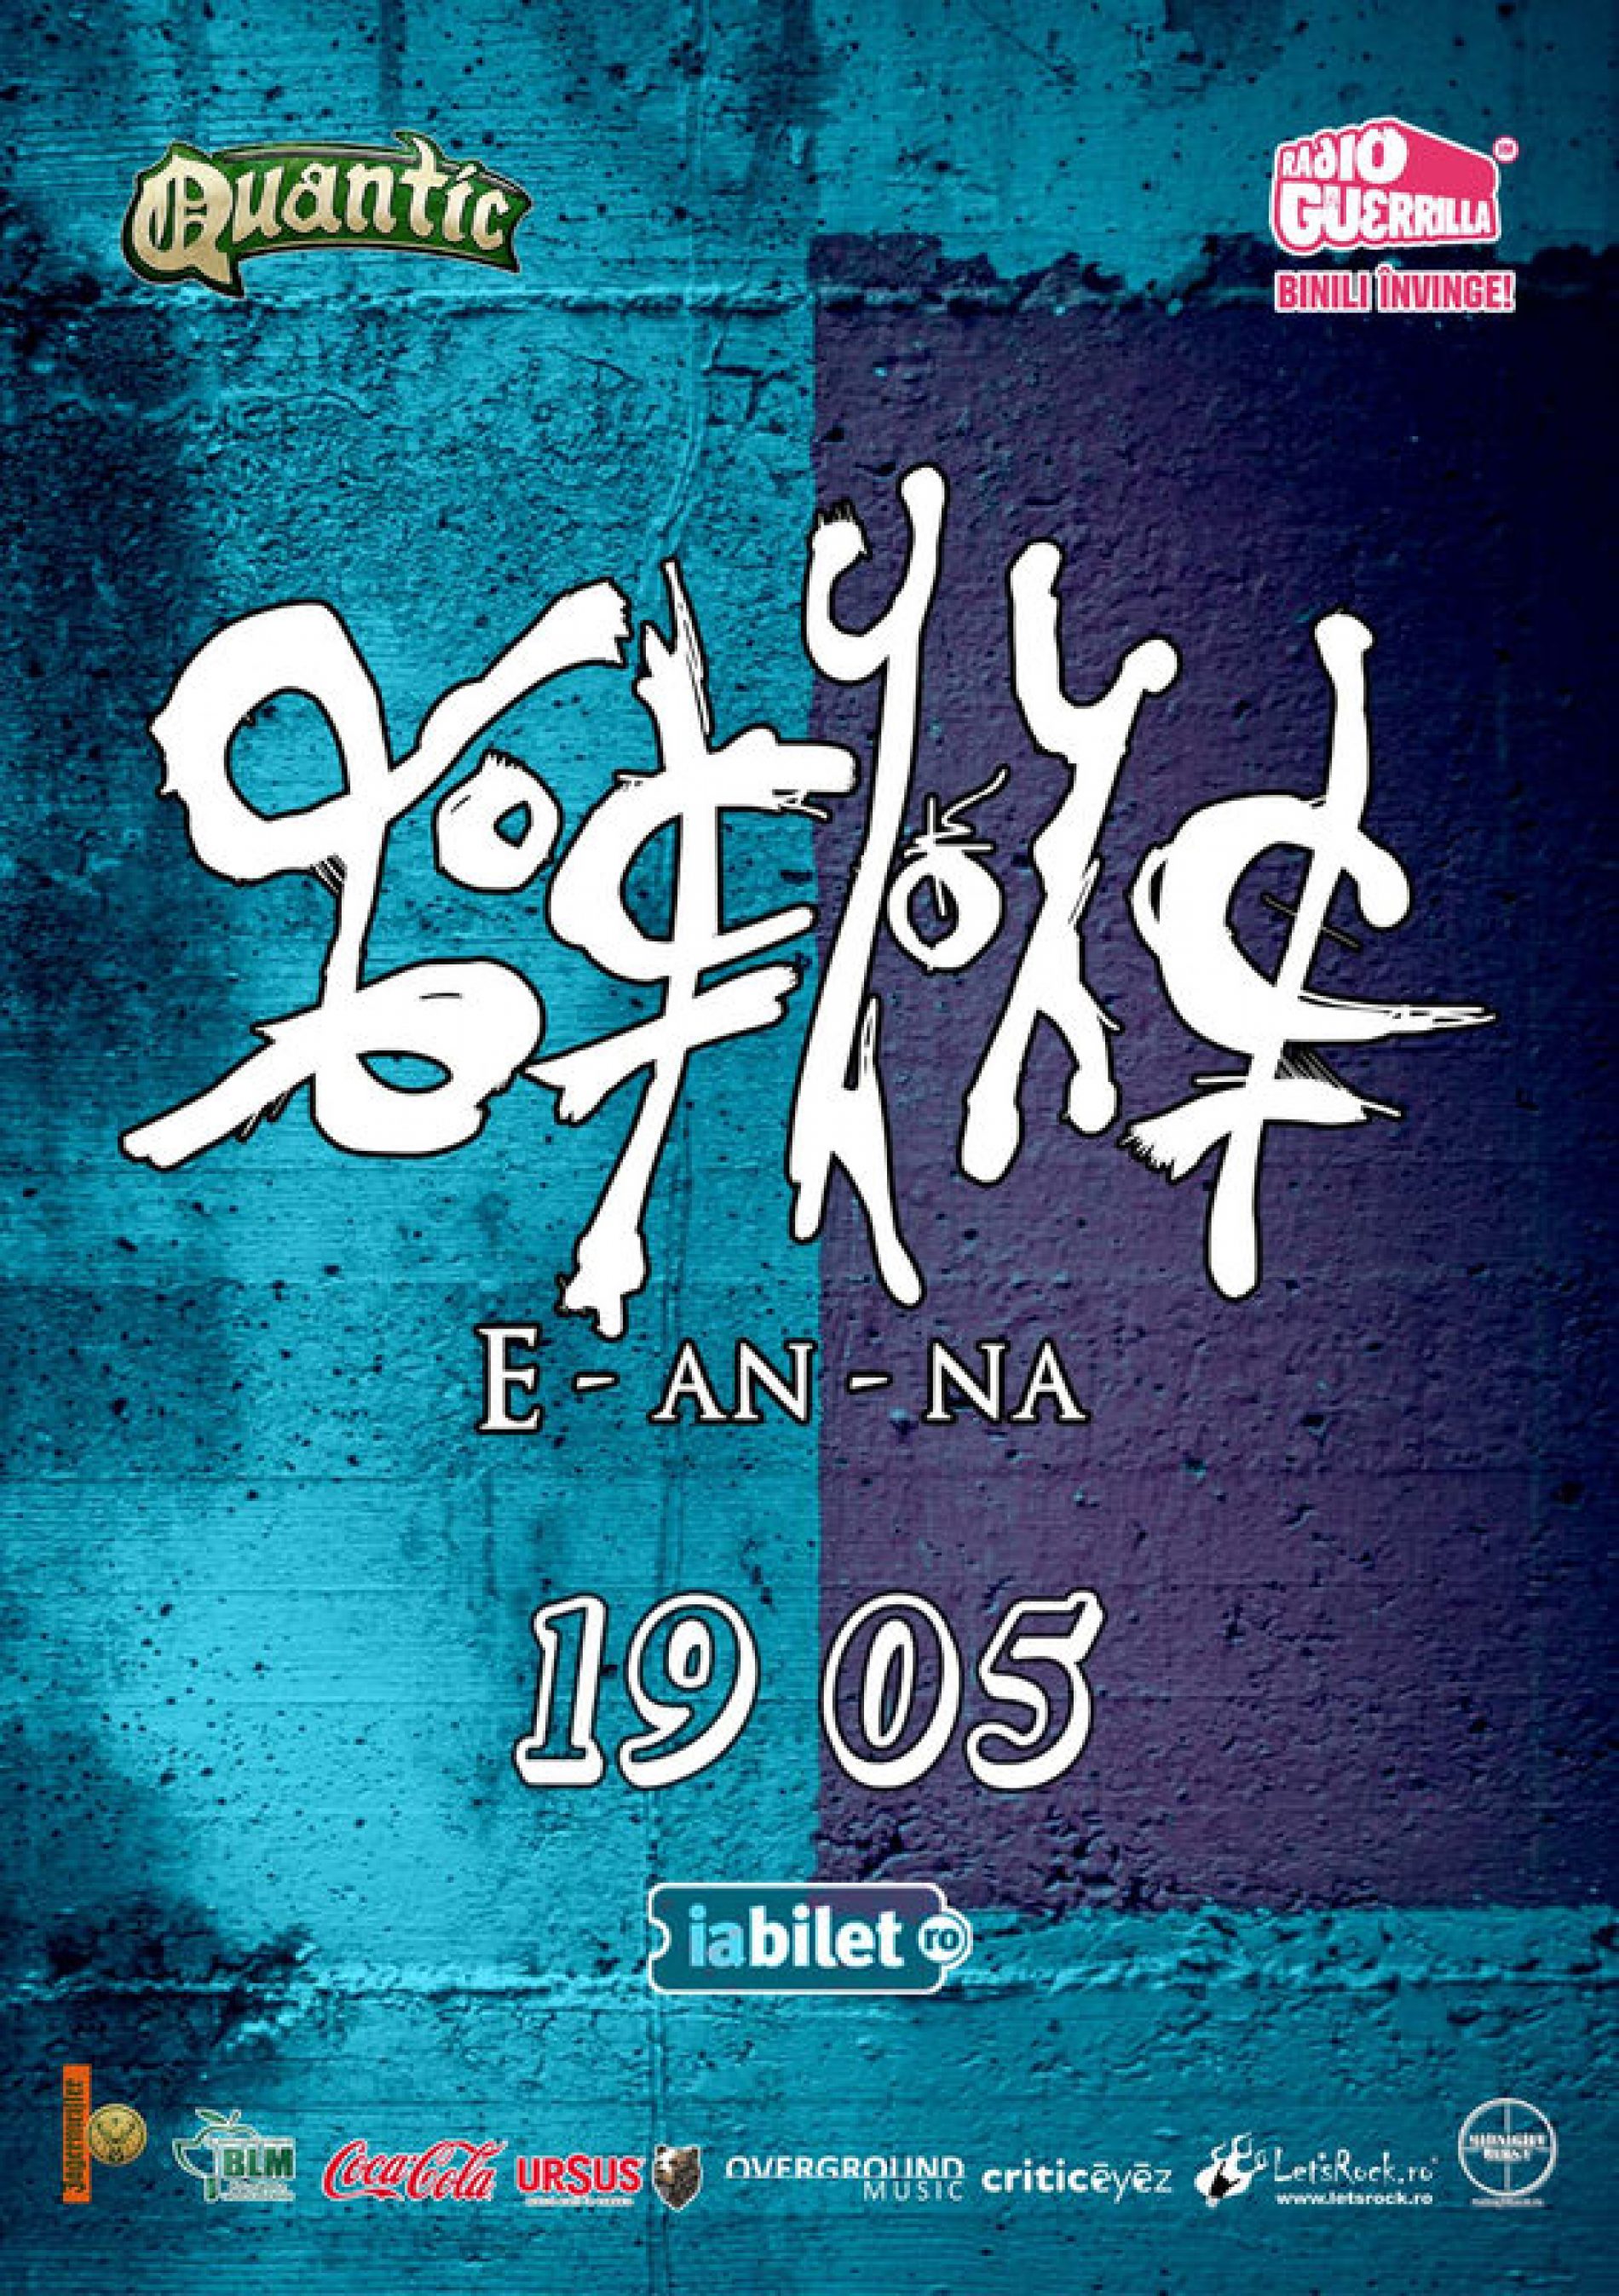 Concert electric E-An-Na în Quantic